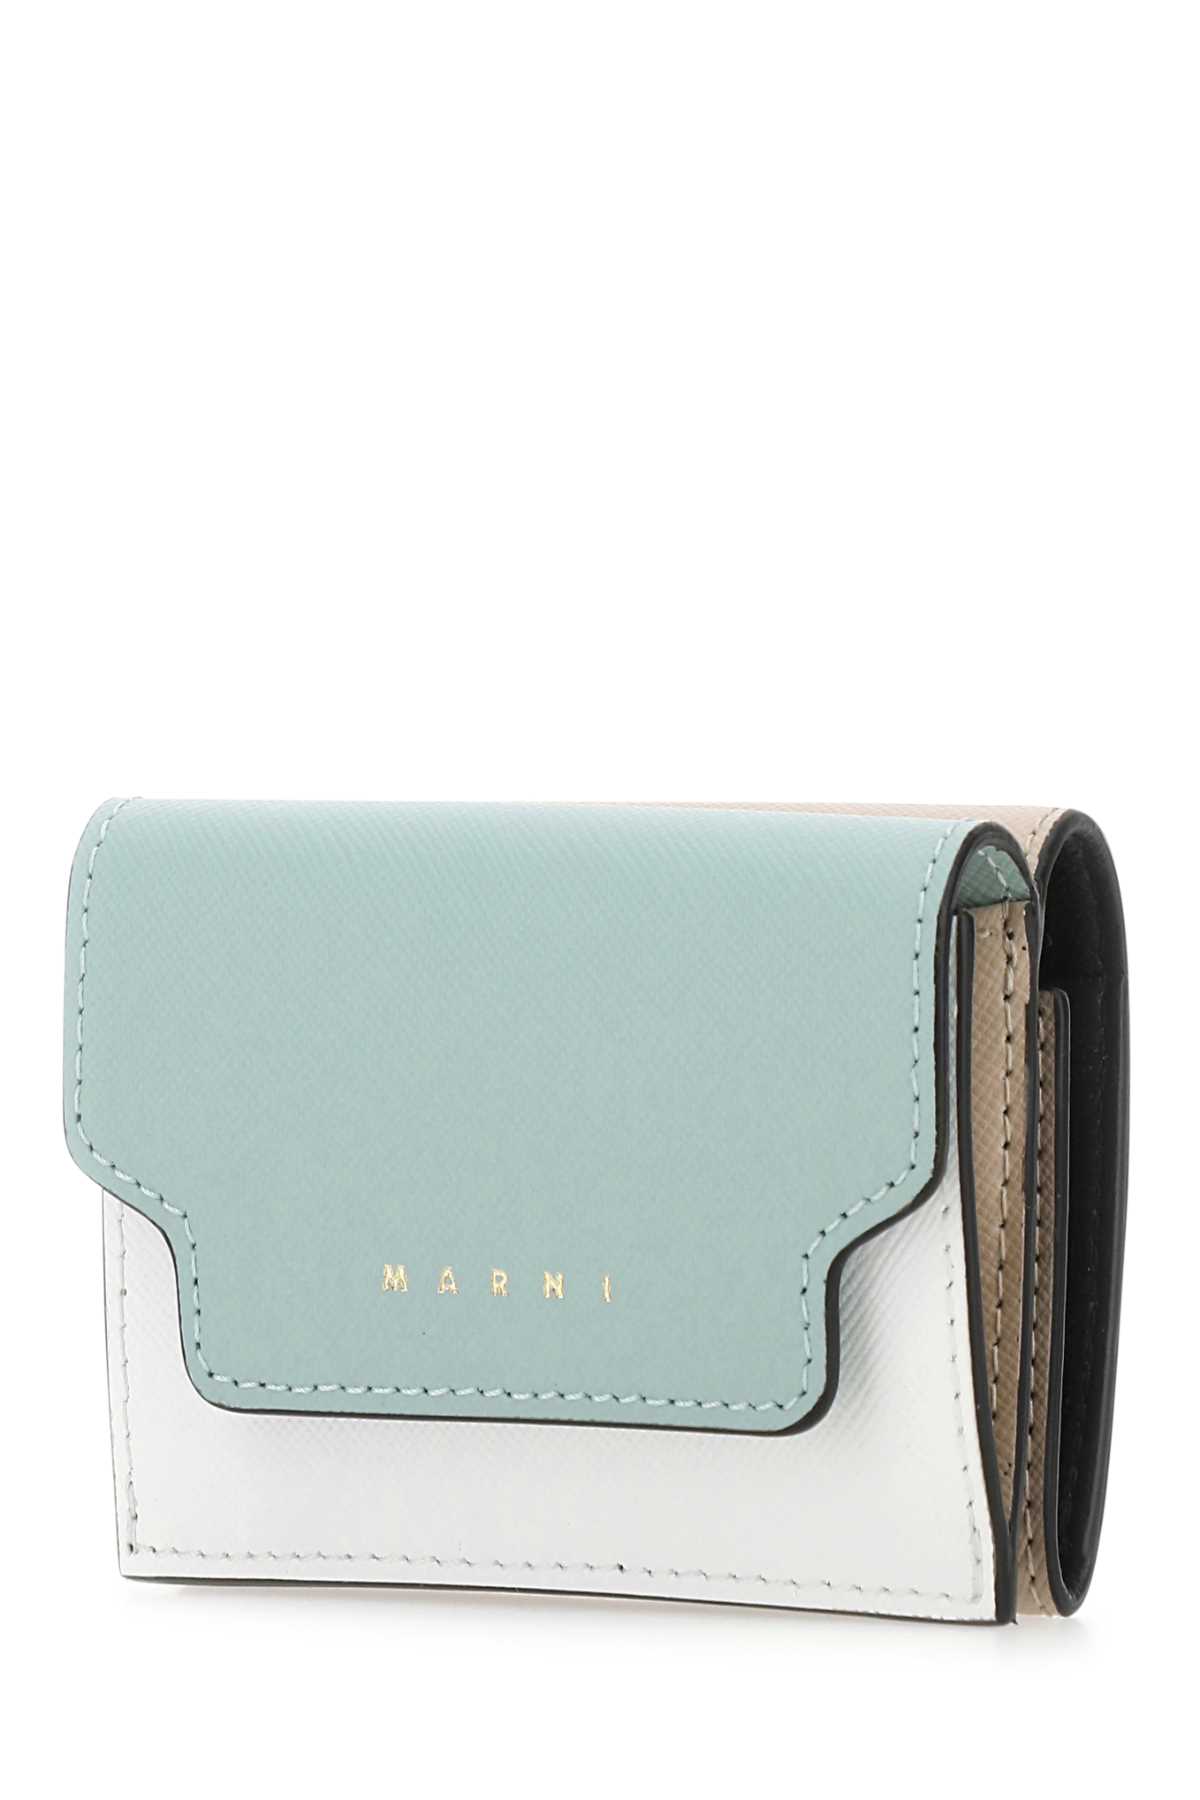 Marni Multicolor Leather Wallet In Z120n